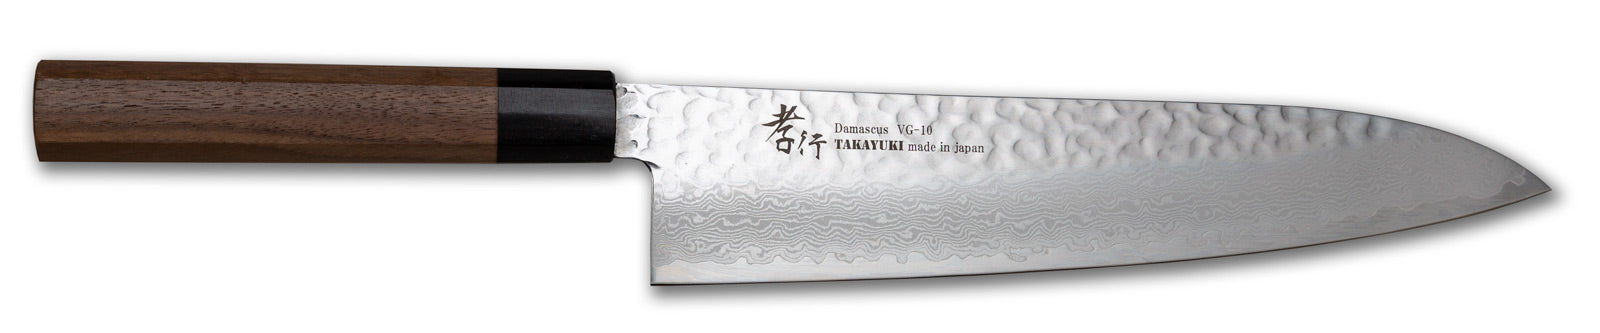 Sakai Takayuki Couteau de chef Damas 33 couches, 240 mm / 9,5", manche en bois de noyer